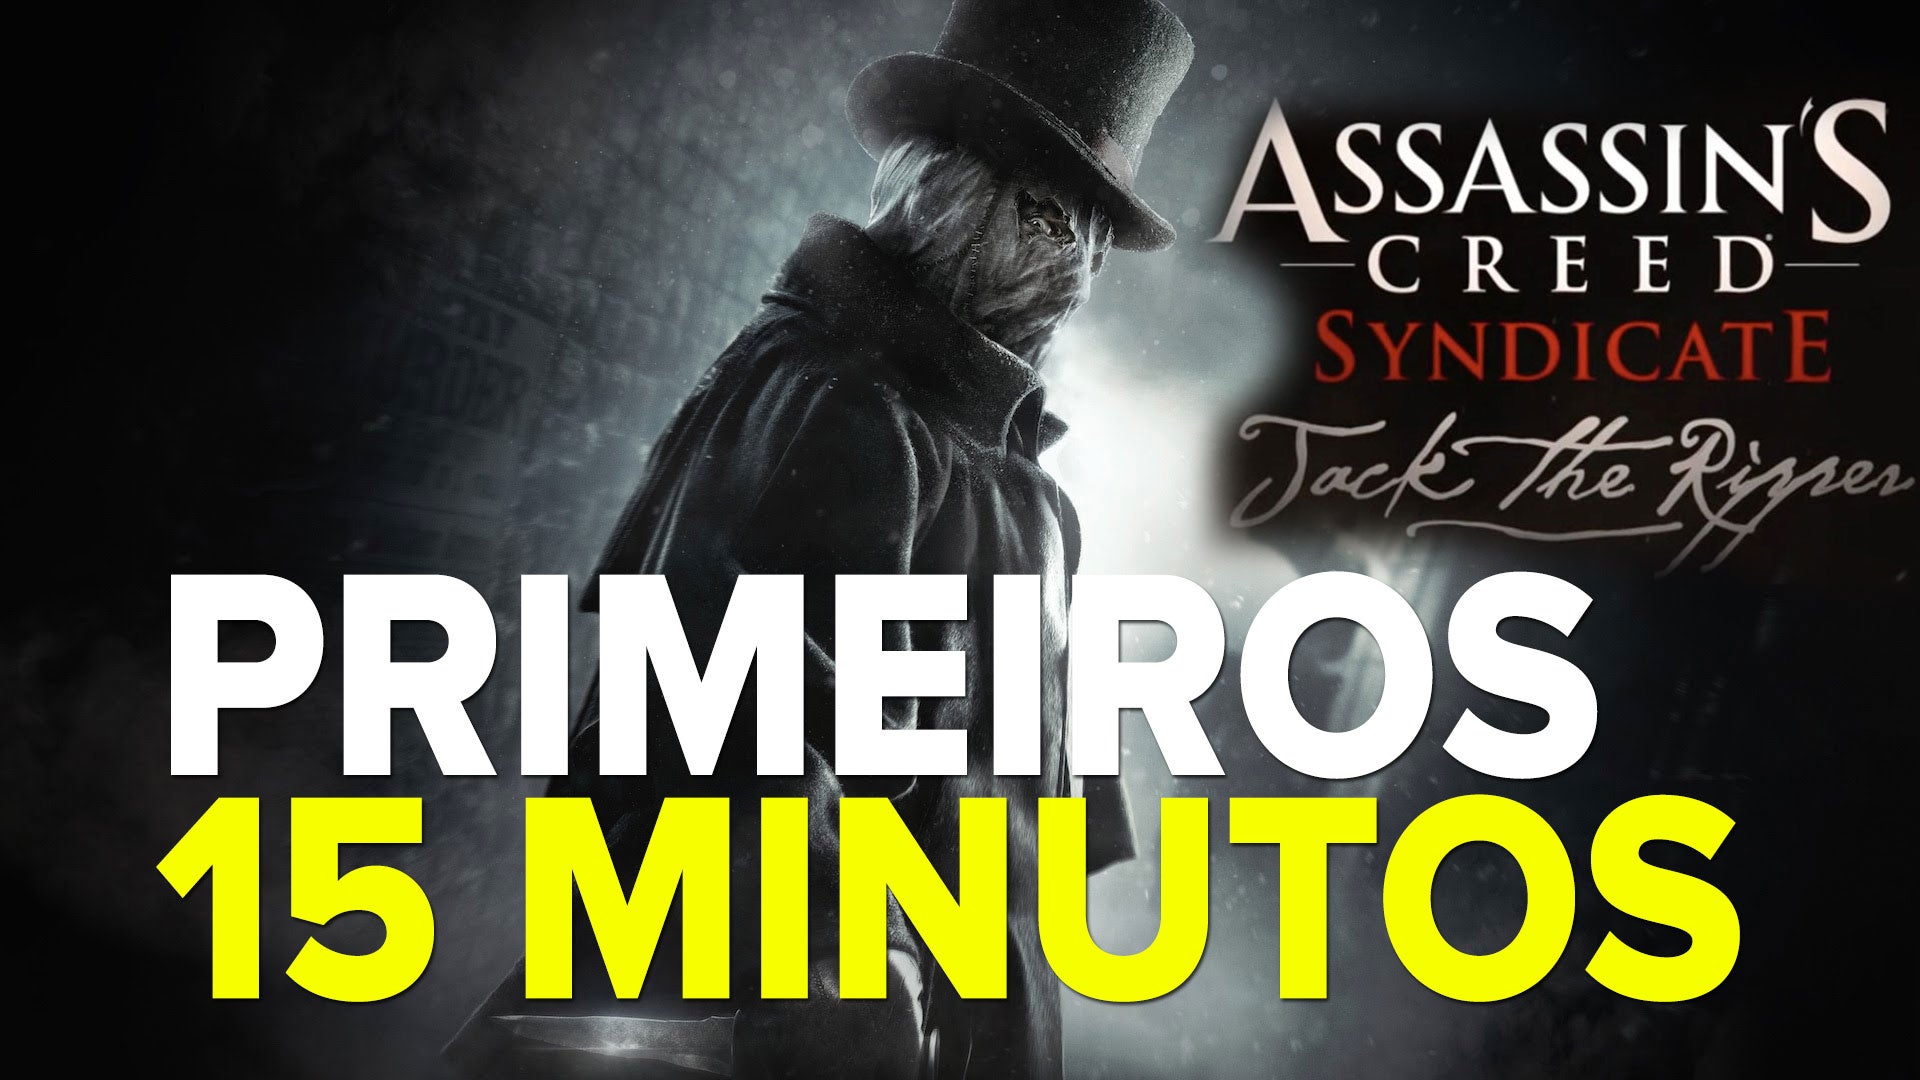 Imagem para Assassin's Creed Syndicate: Jack the Ripper - Gameplay Primeiros 15 minutos